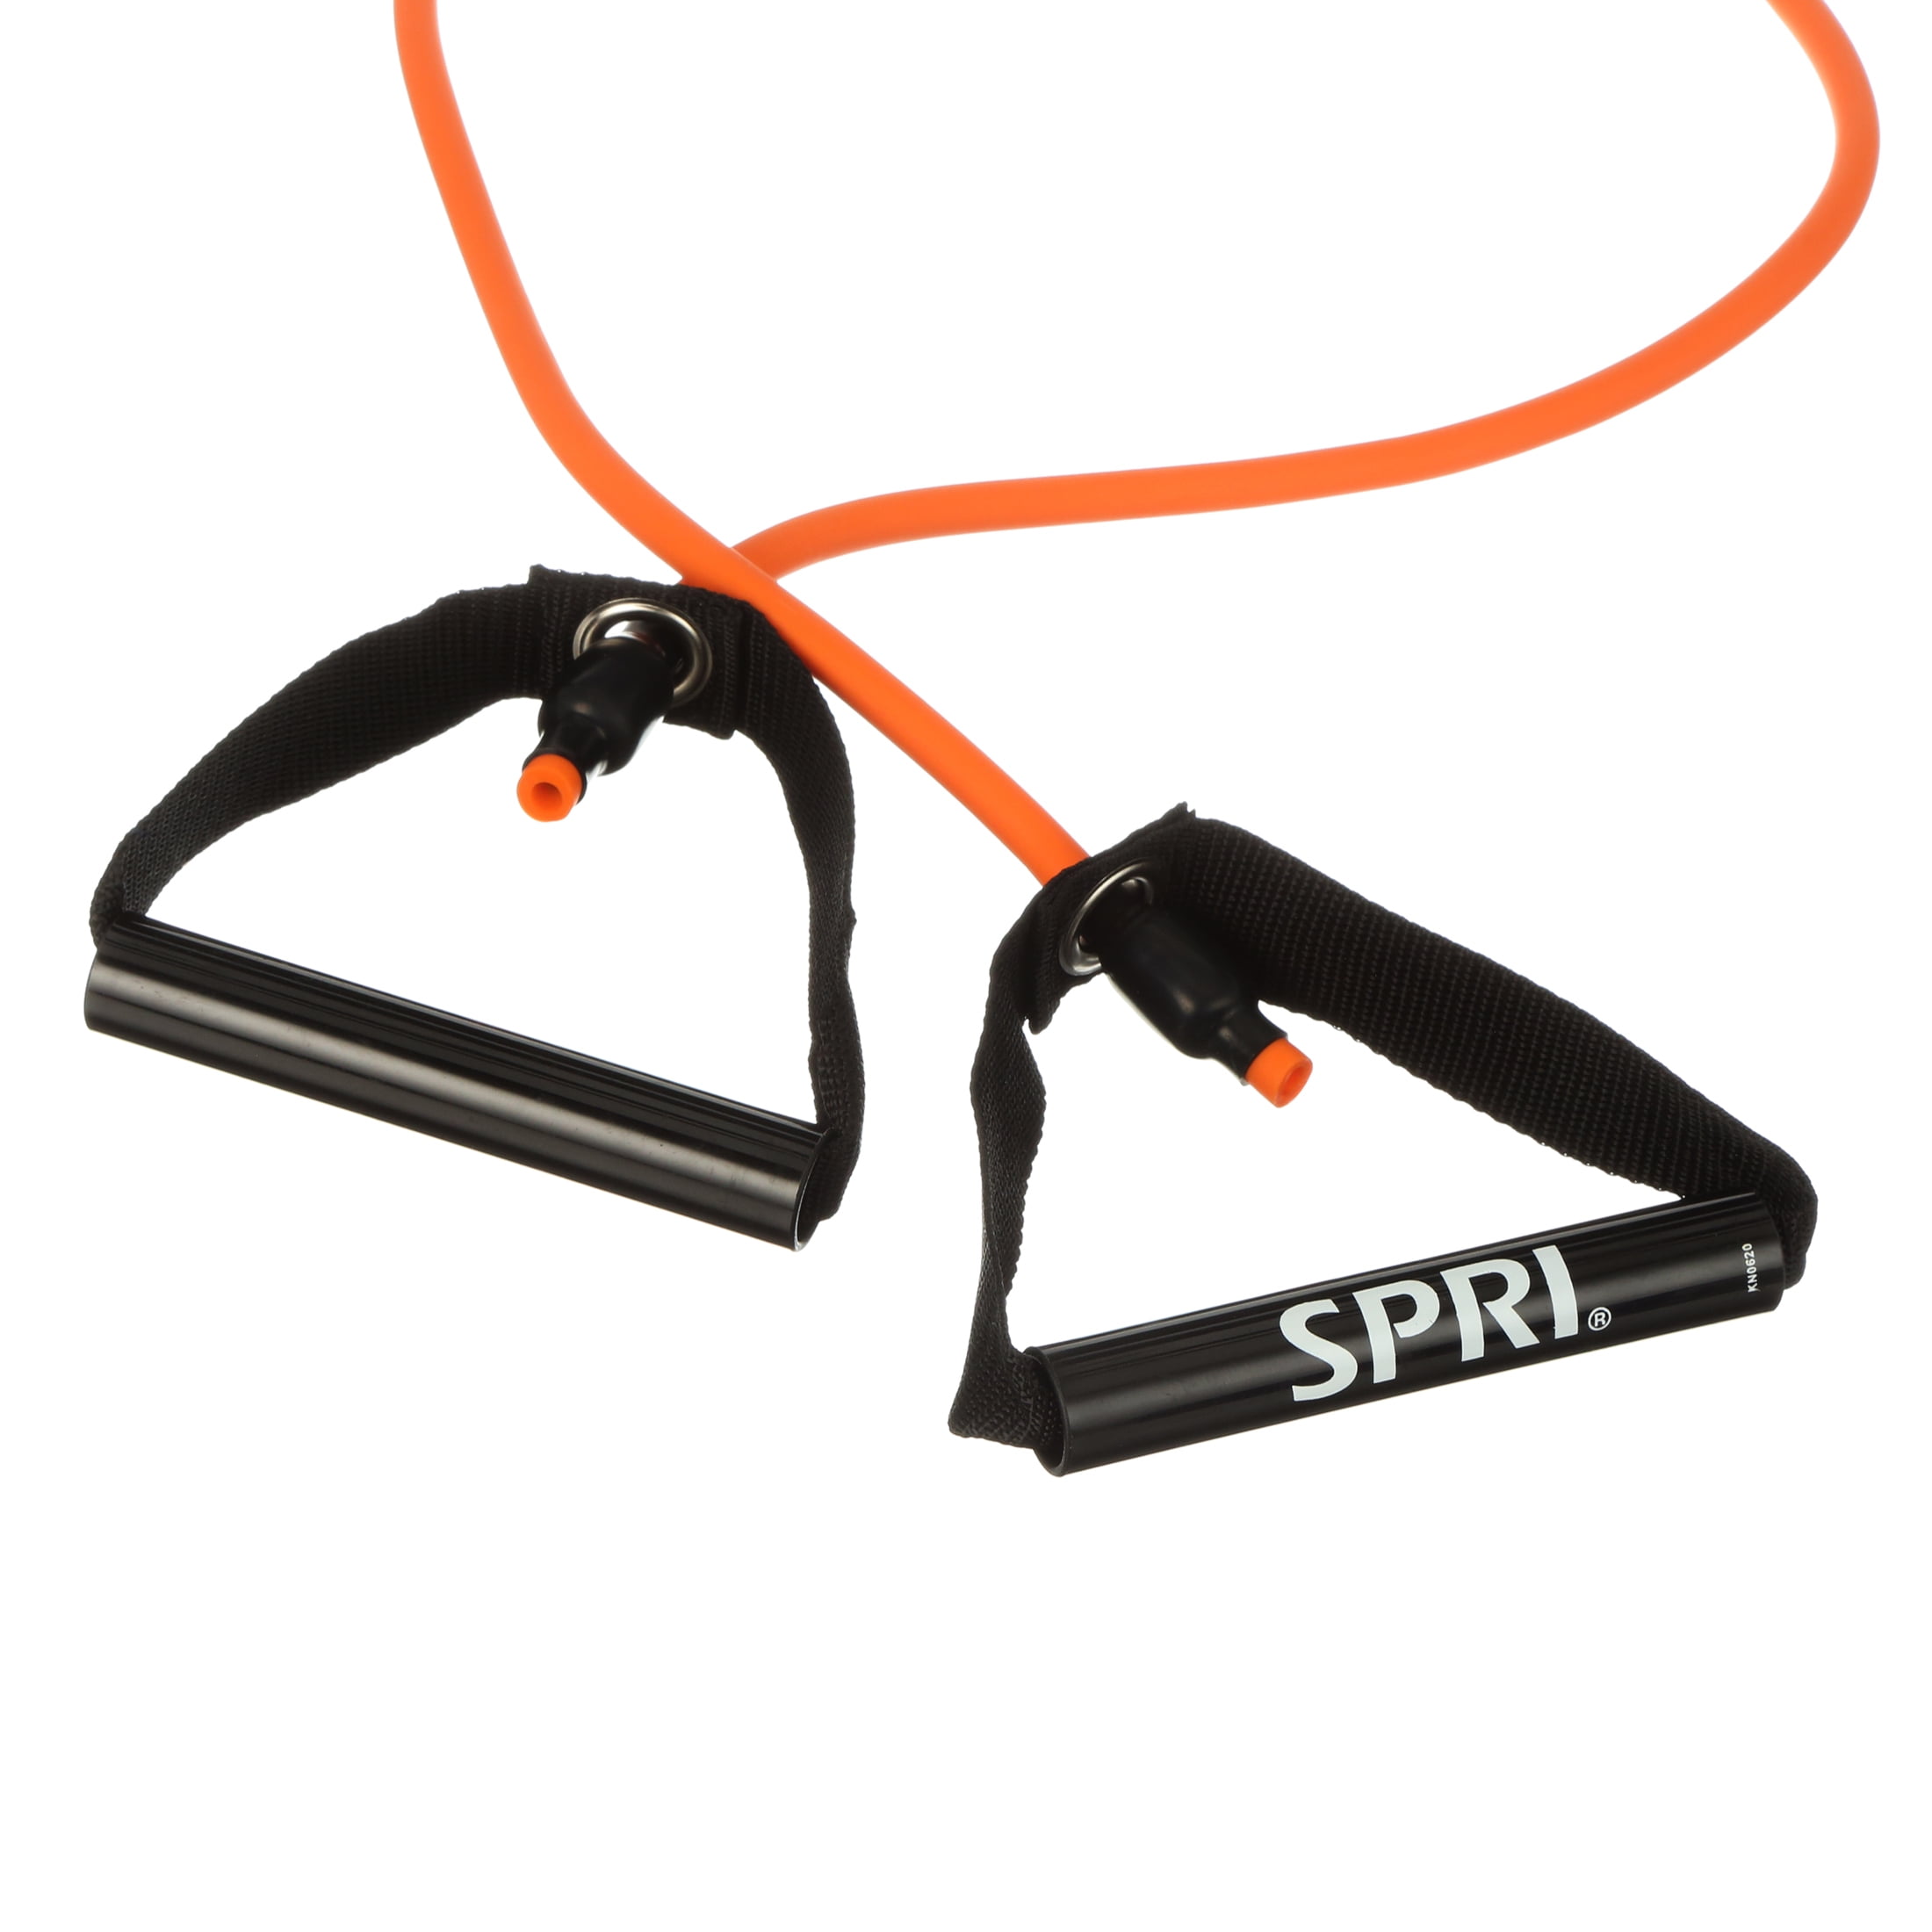 SPRI Professional Strength Resistance Tube, Medium Resistance Level, Exercise Bands, Blue